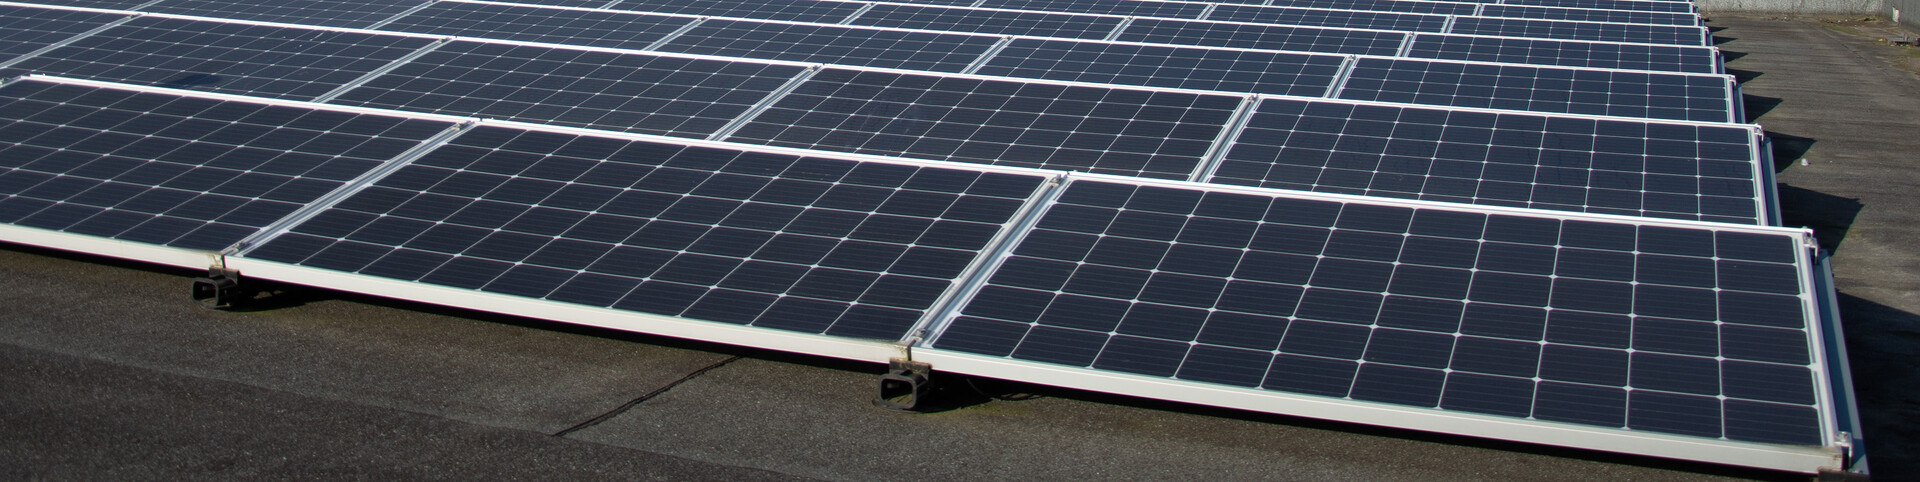 Hero-Plymovent-solar-panels-Alkmaar.jpg